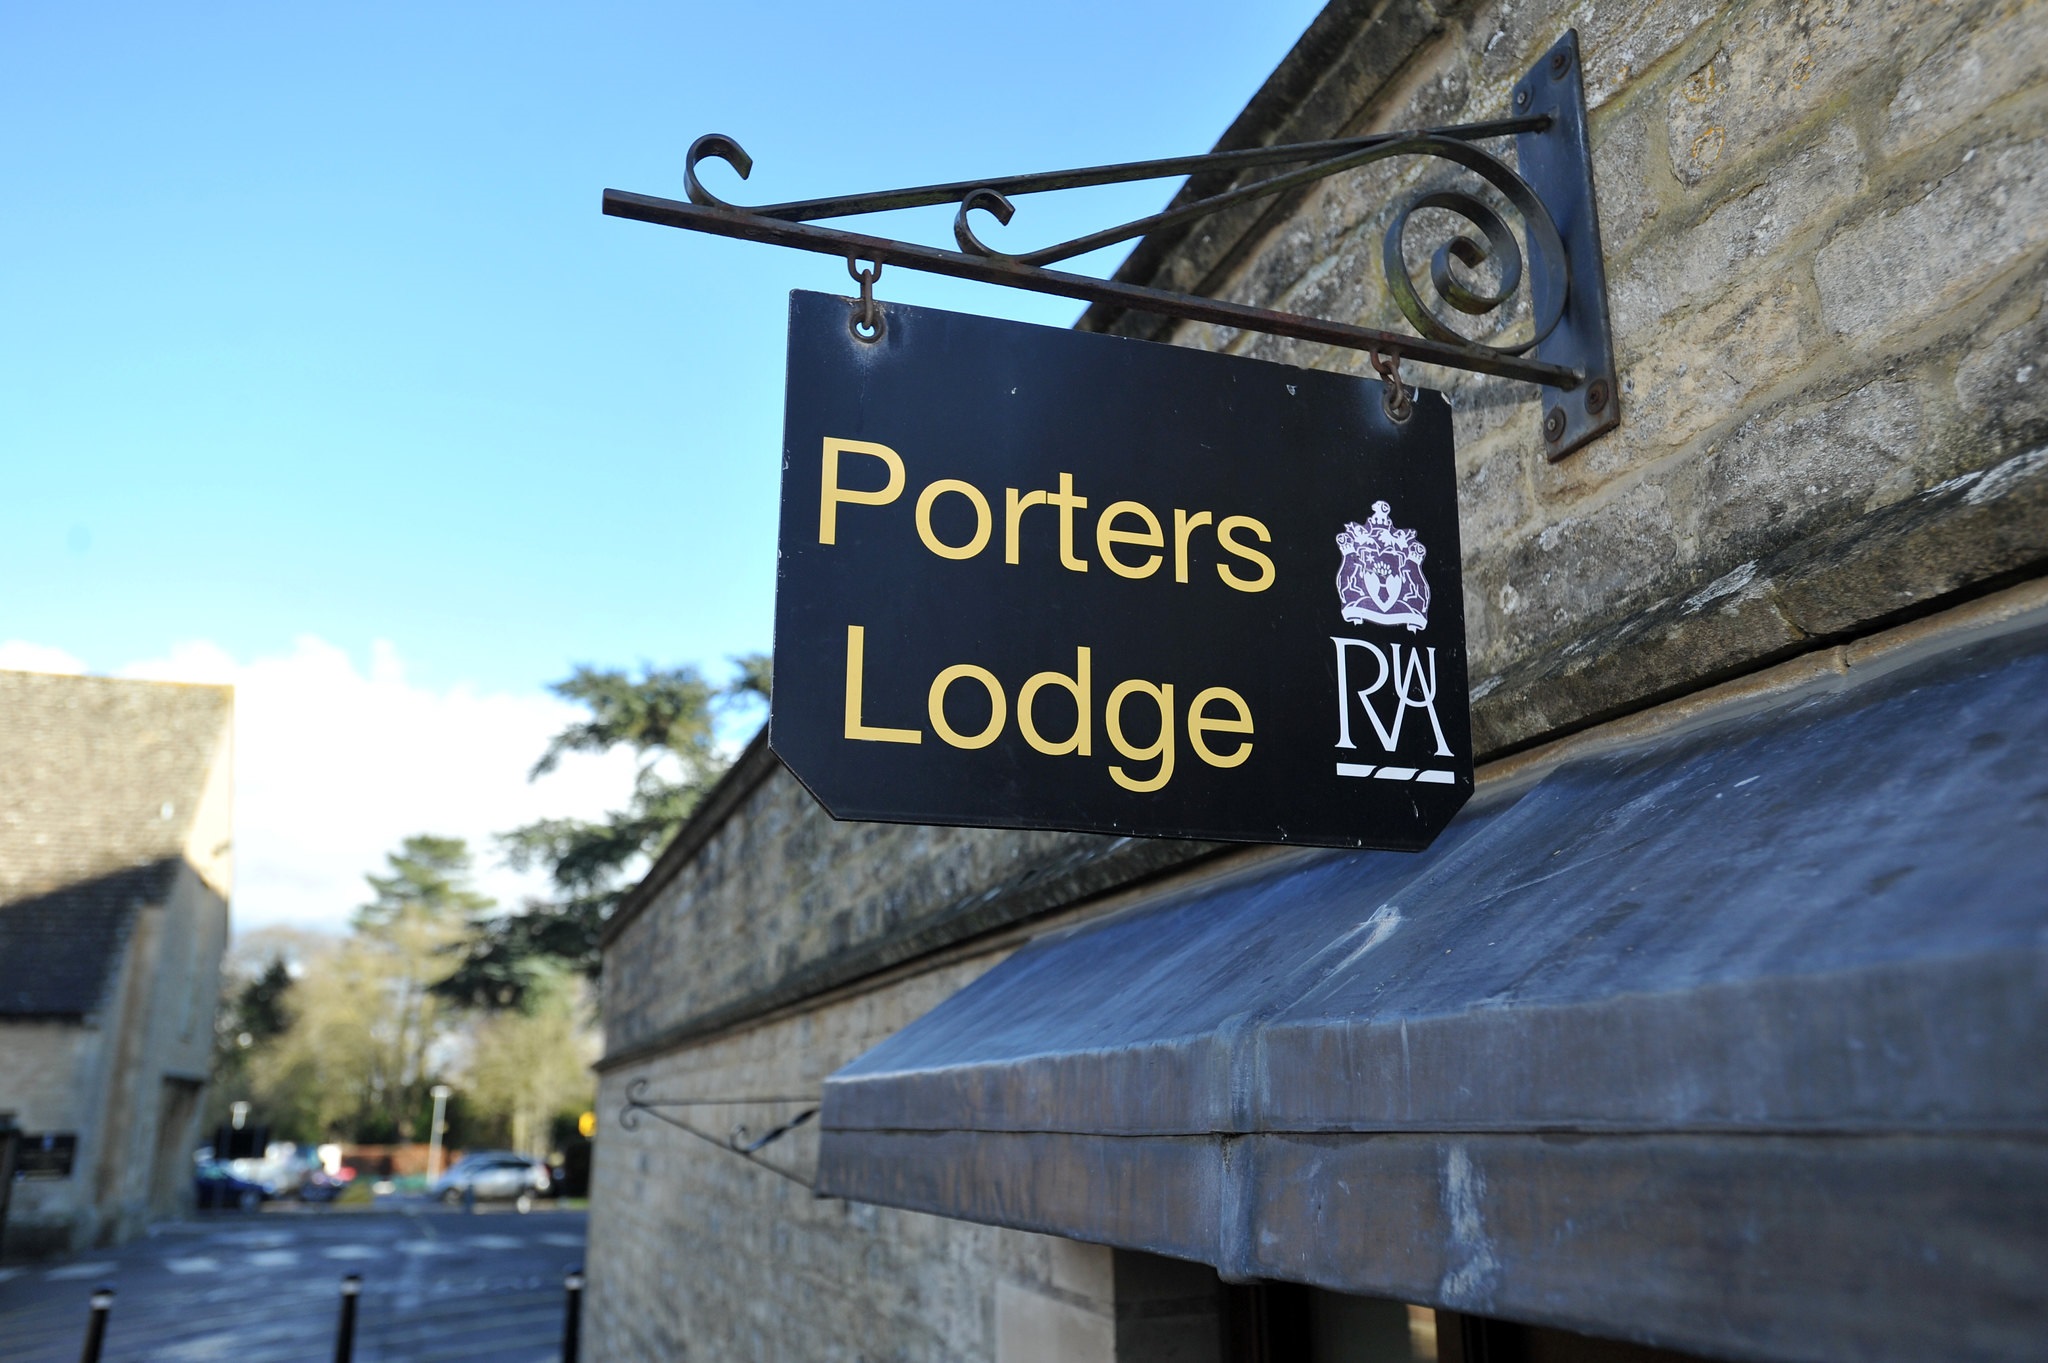 Porters Lodge